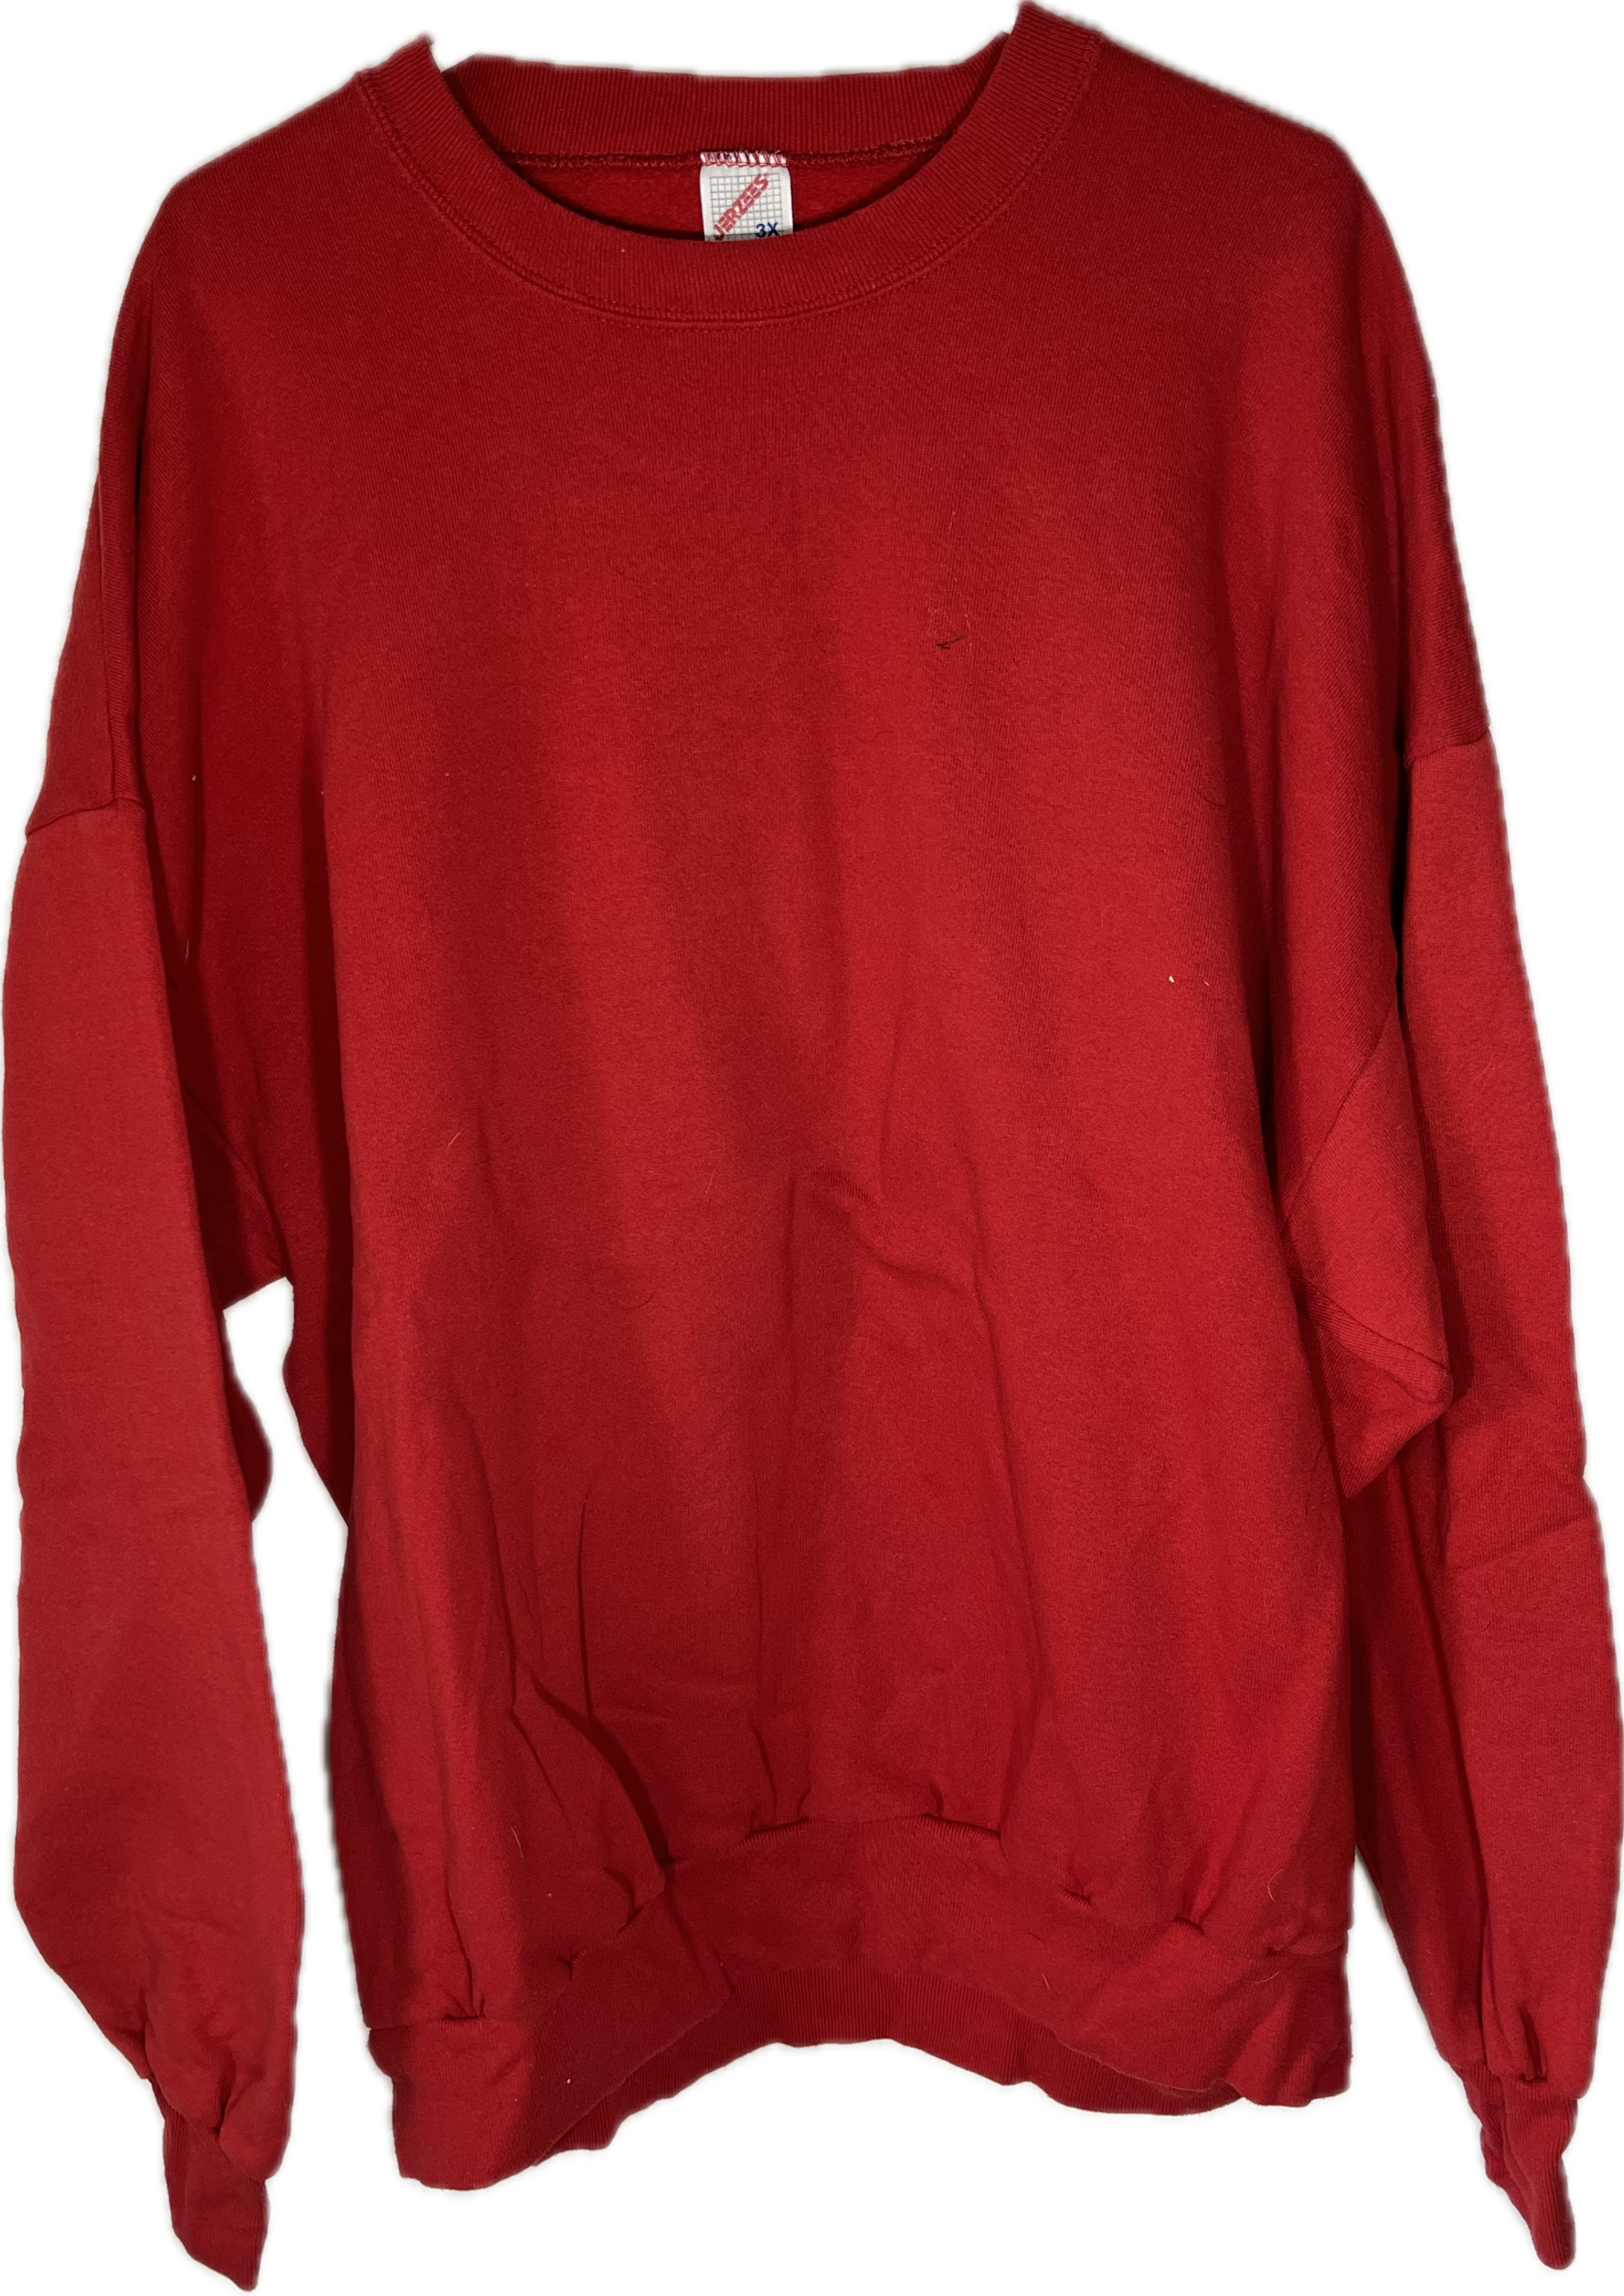 New VTG 90s Men Blank Jerzees 50/50 Red Sweater Sweatshirt (MED